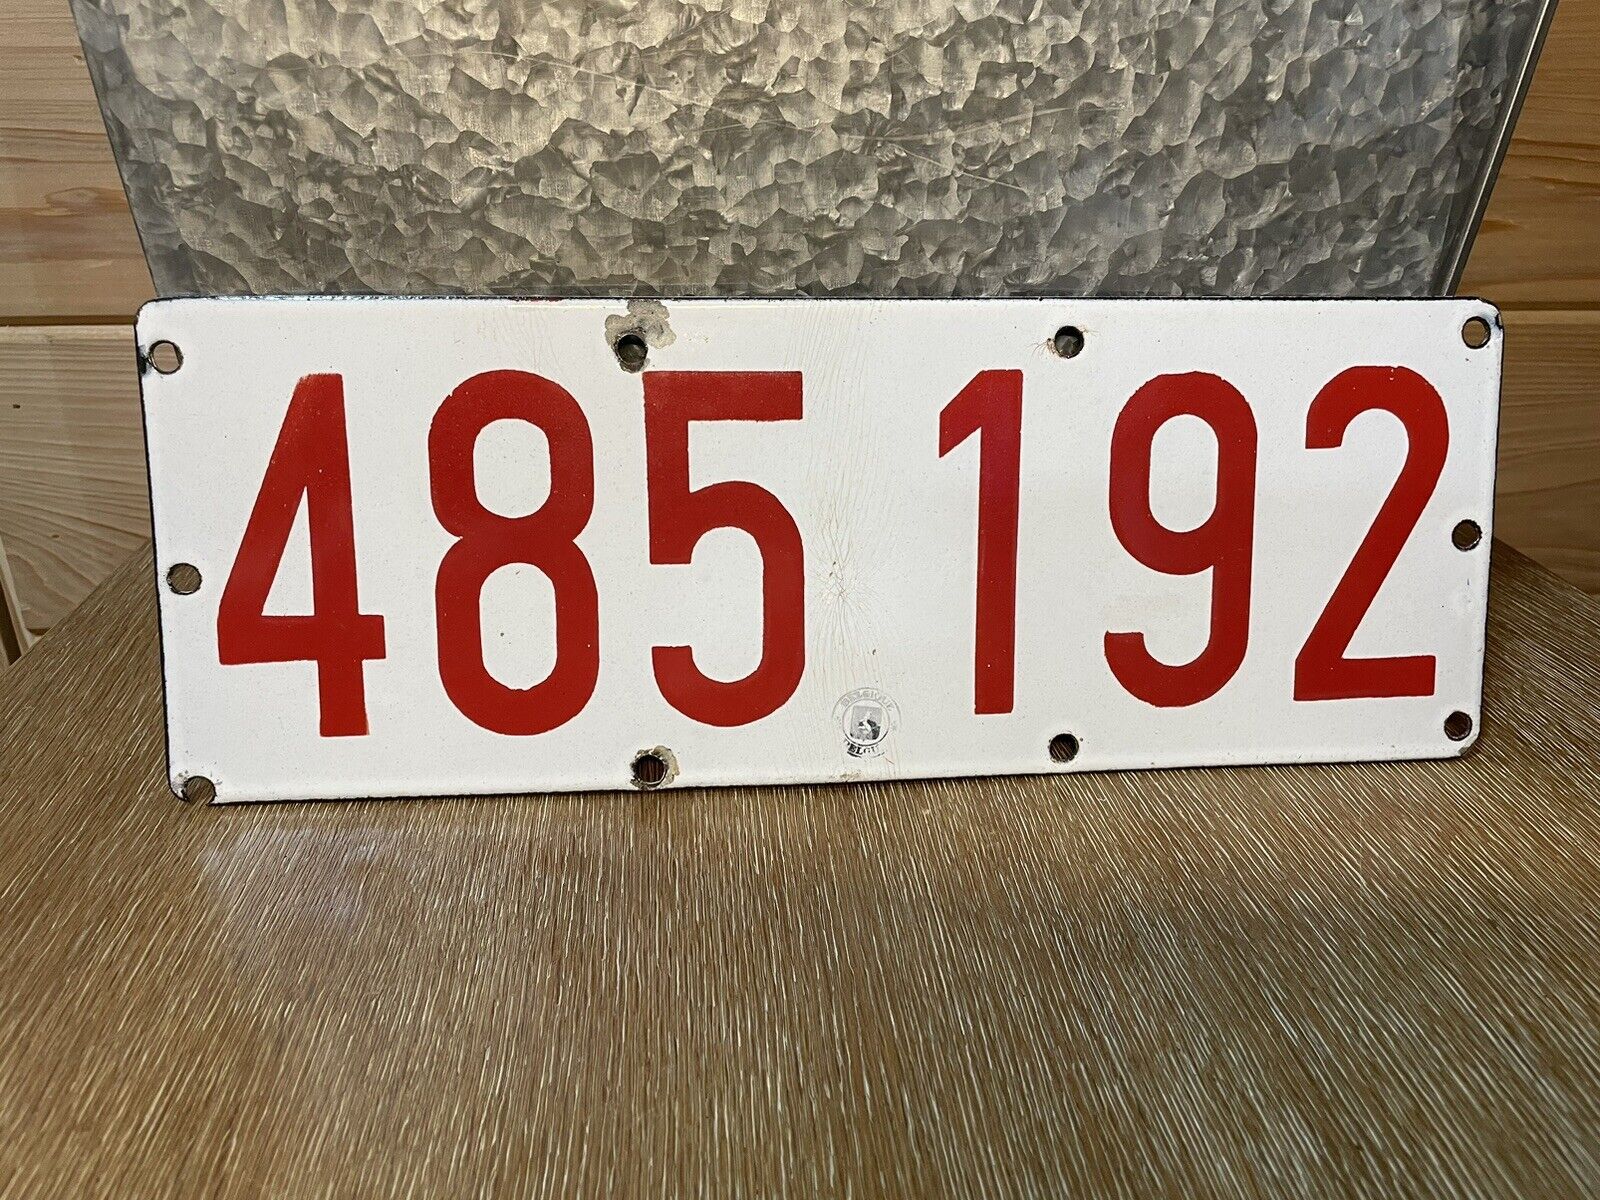 SUPERB 1950s Belgium Belgian PORCELAIN License Plate Tag 485 192